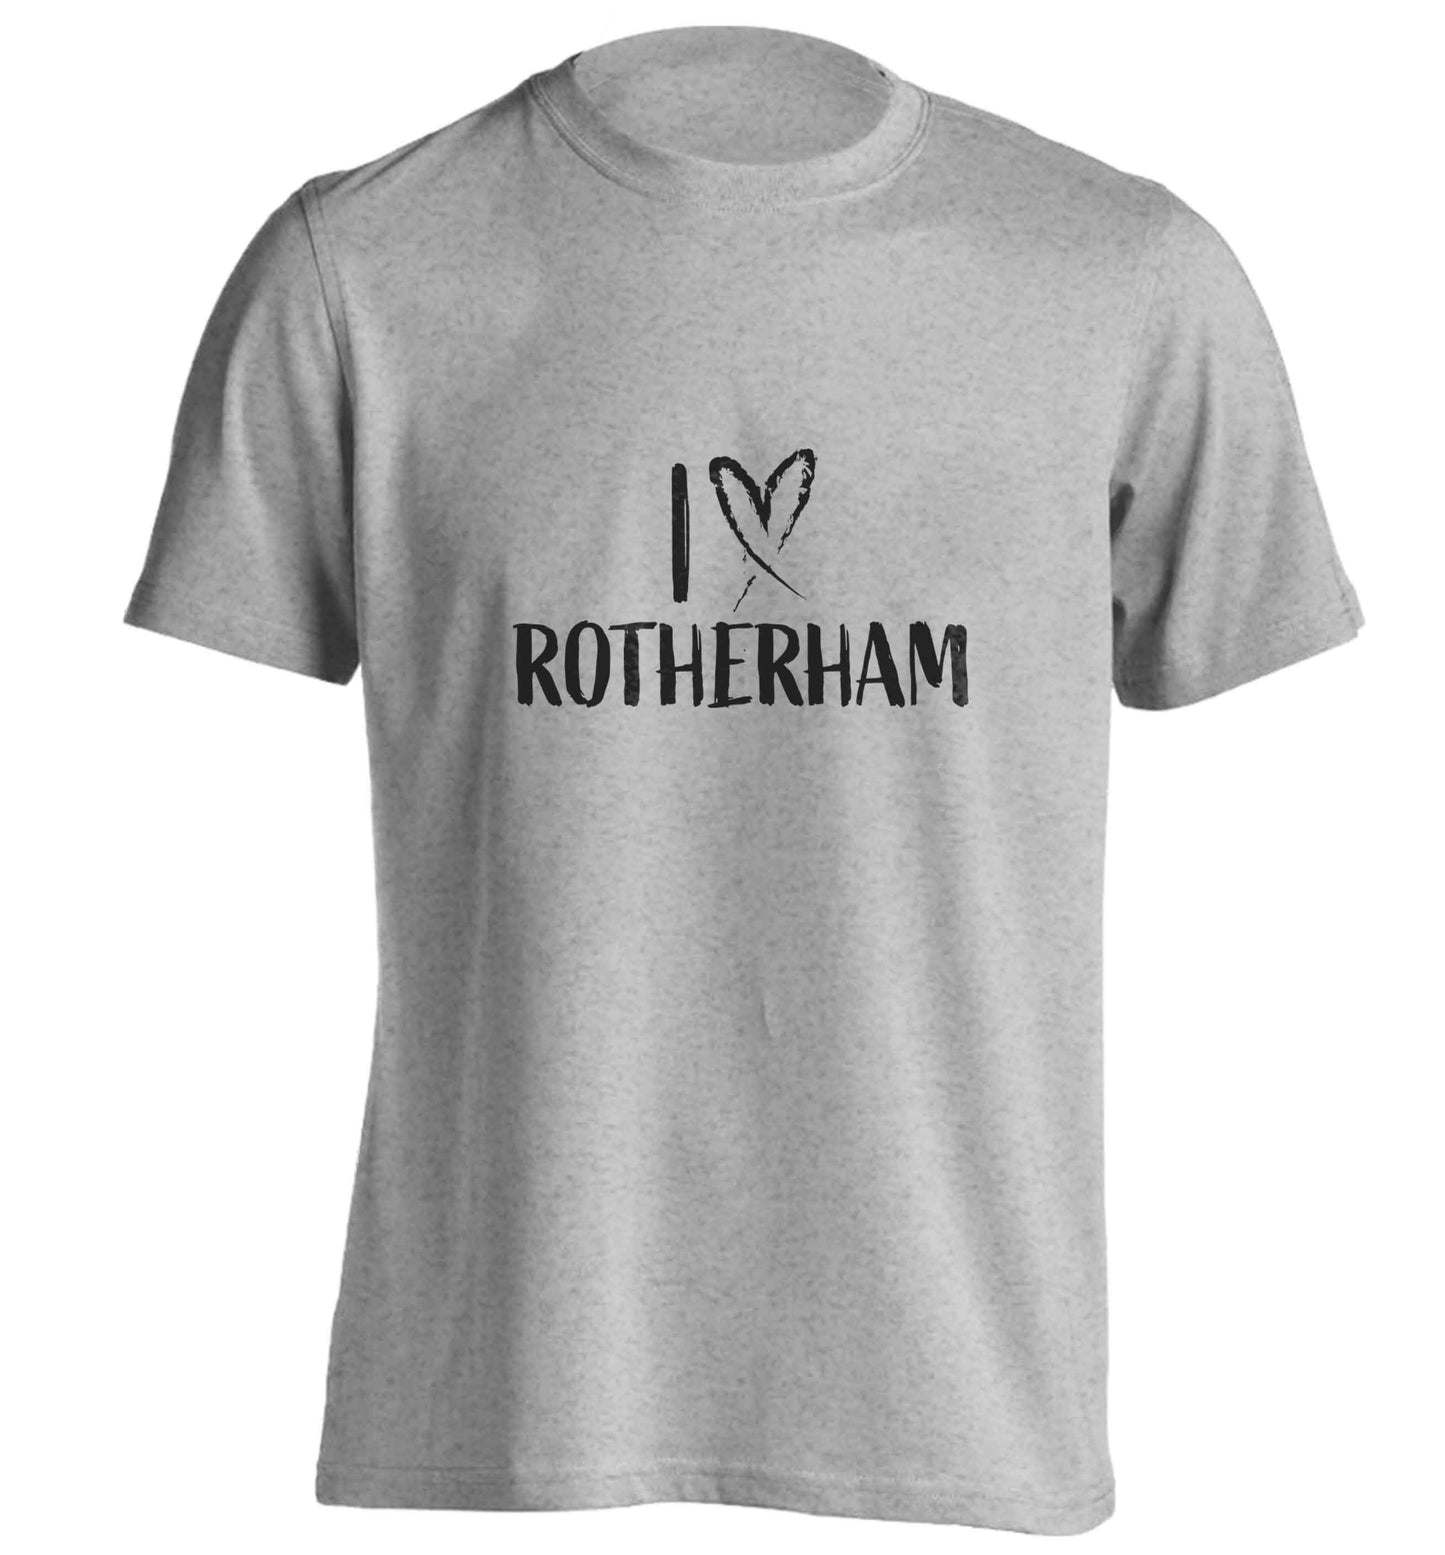 I love Rotherham adults unisex grey Tshirt 2XL